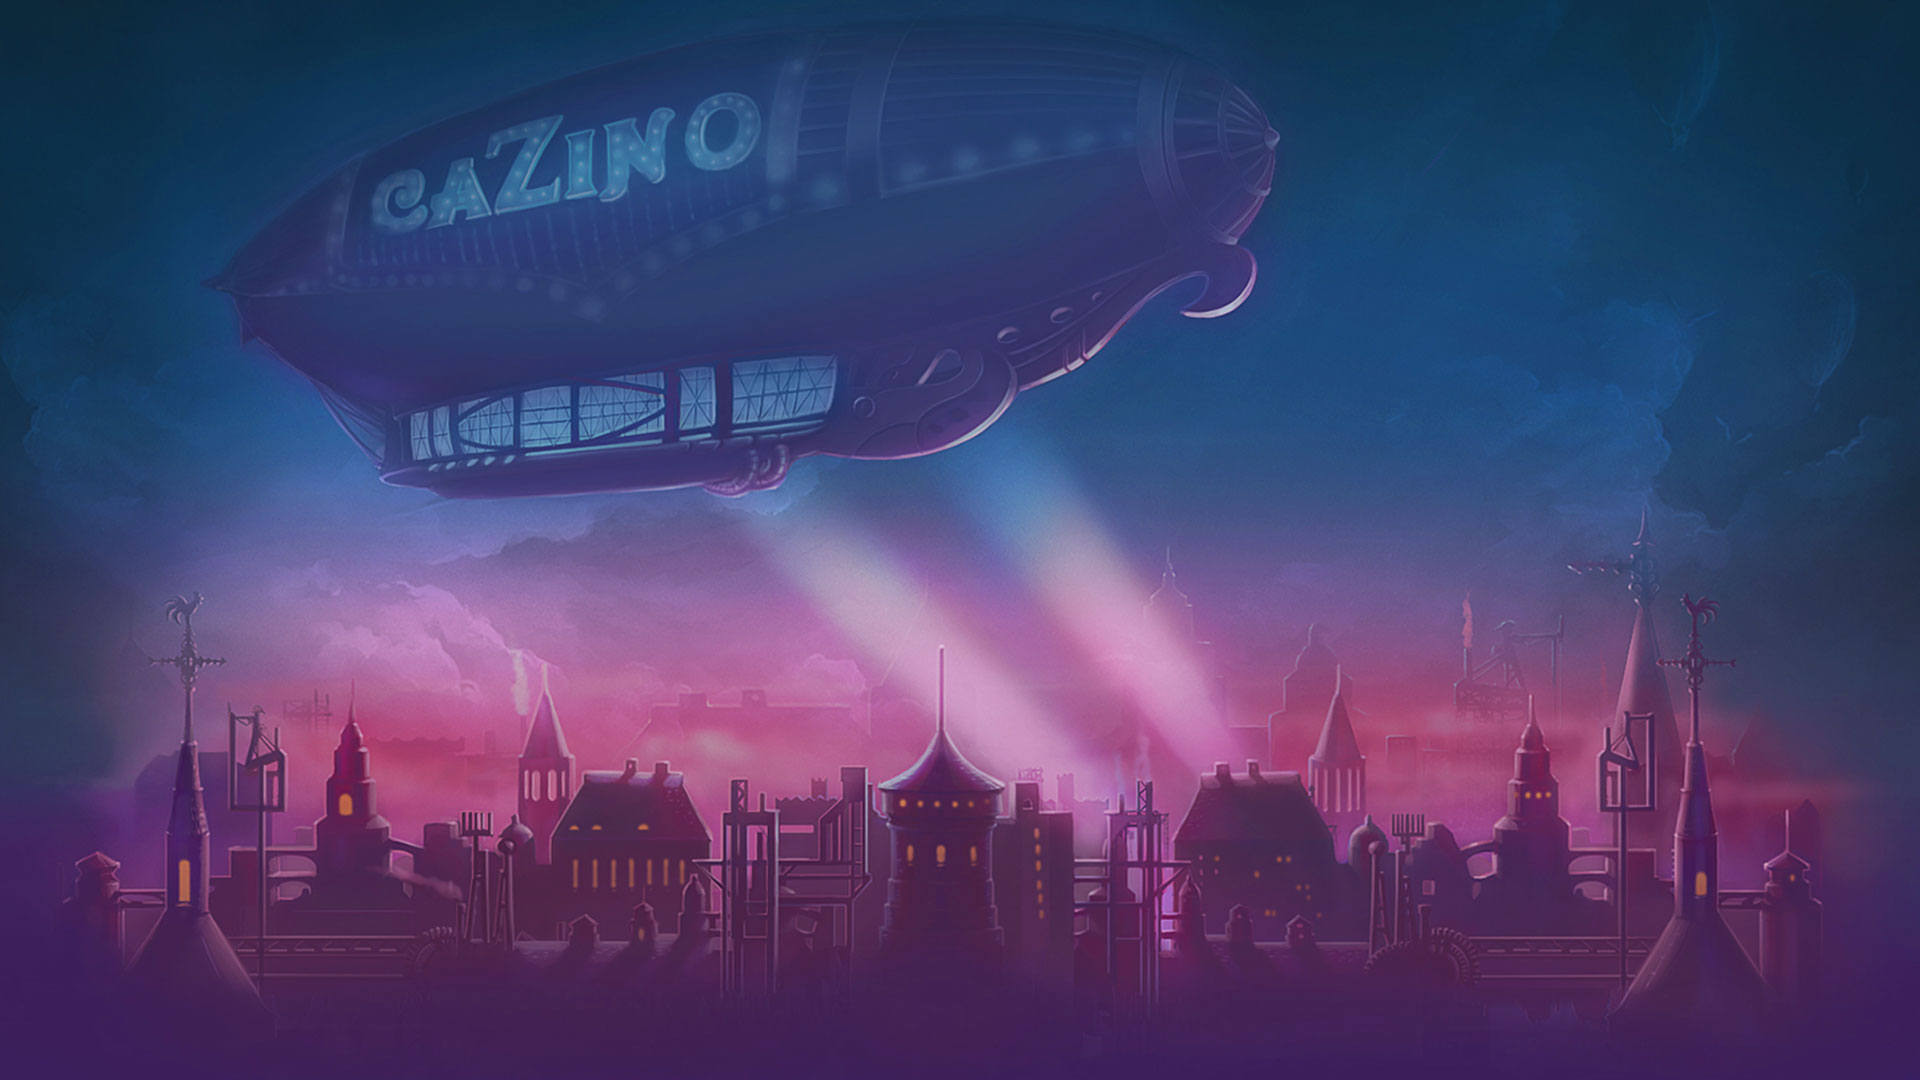 Game hight resolution background Cazino Zeppelin